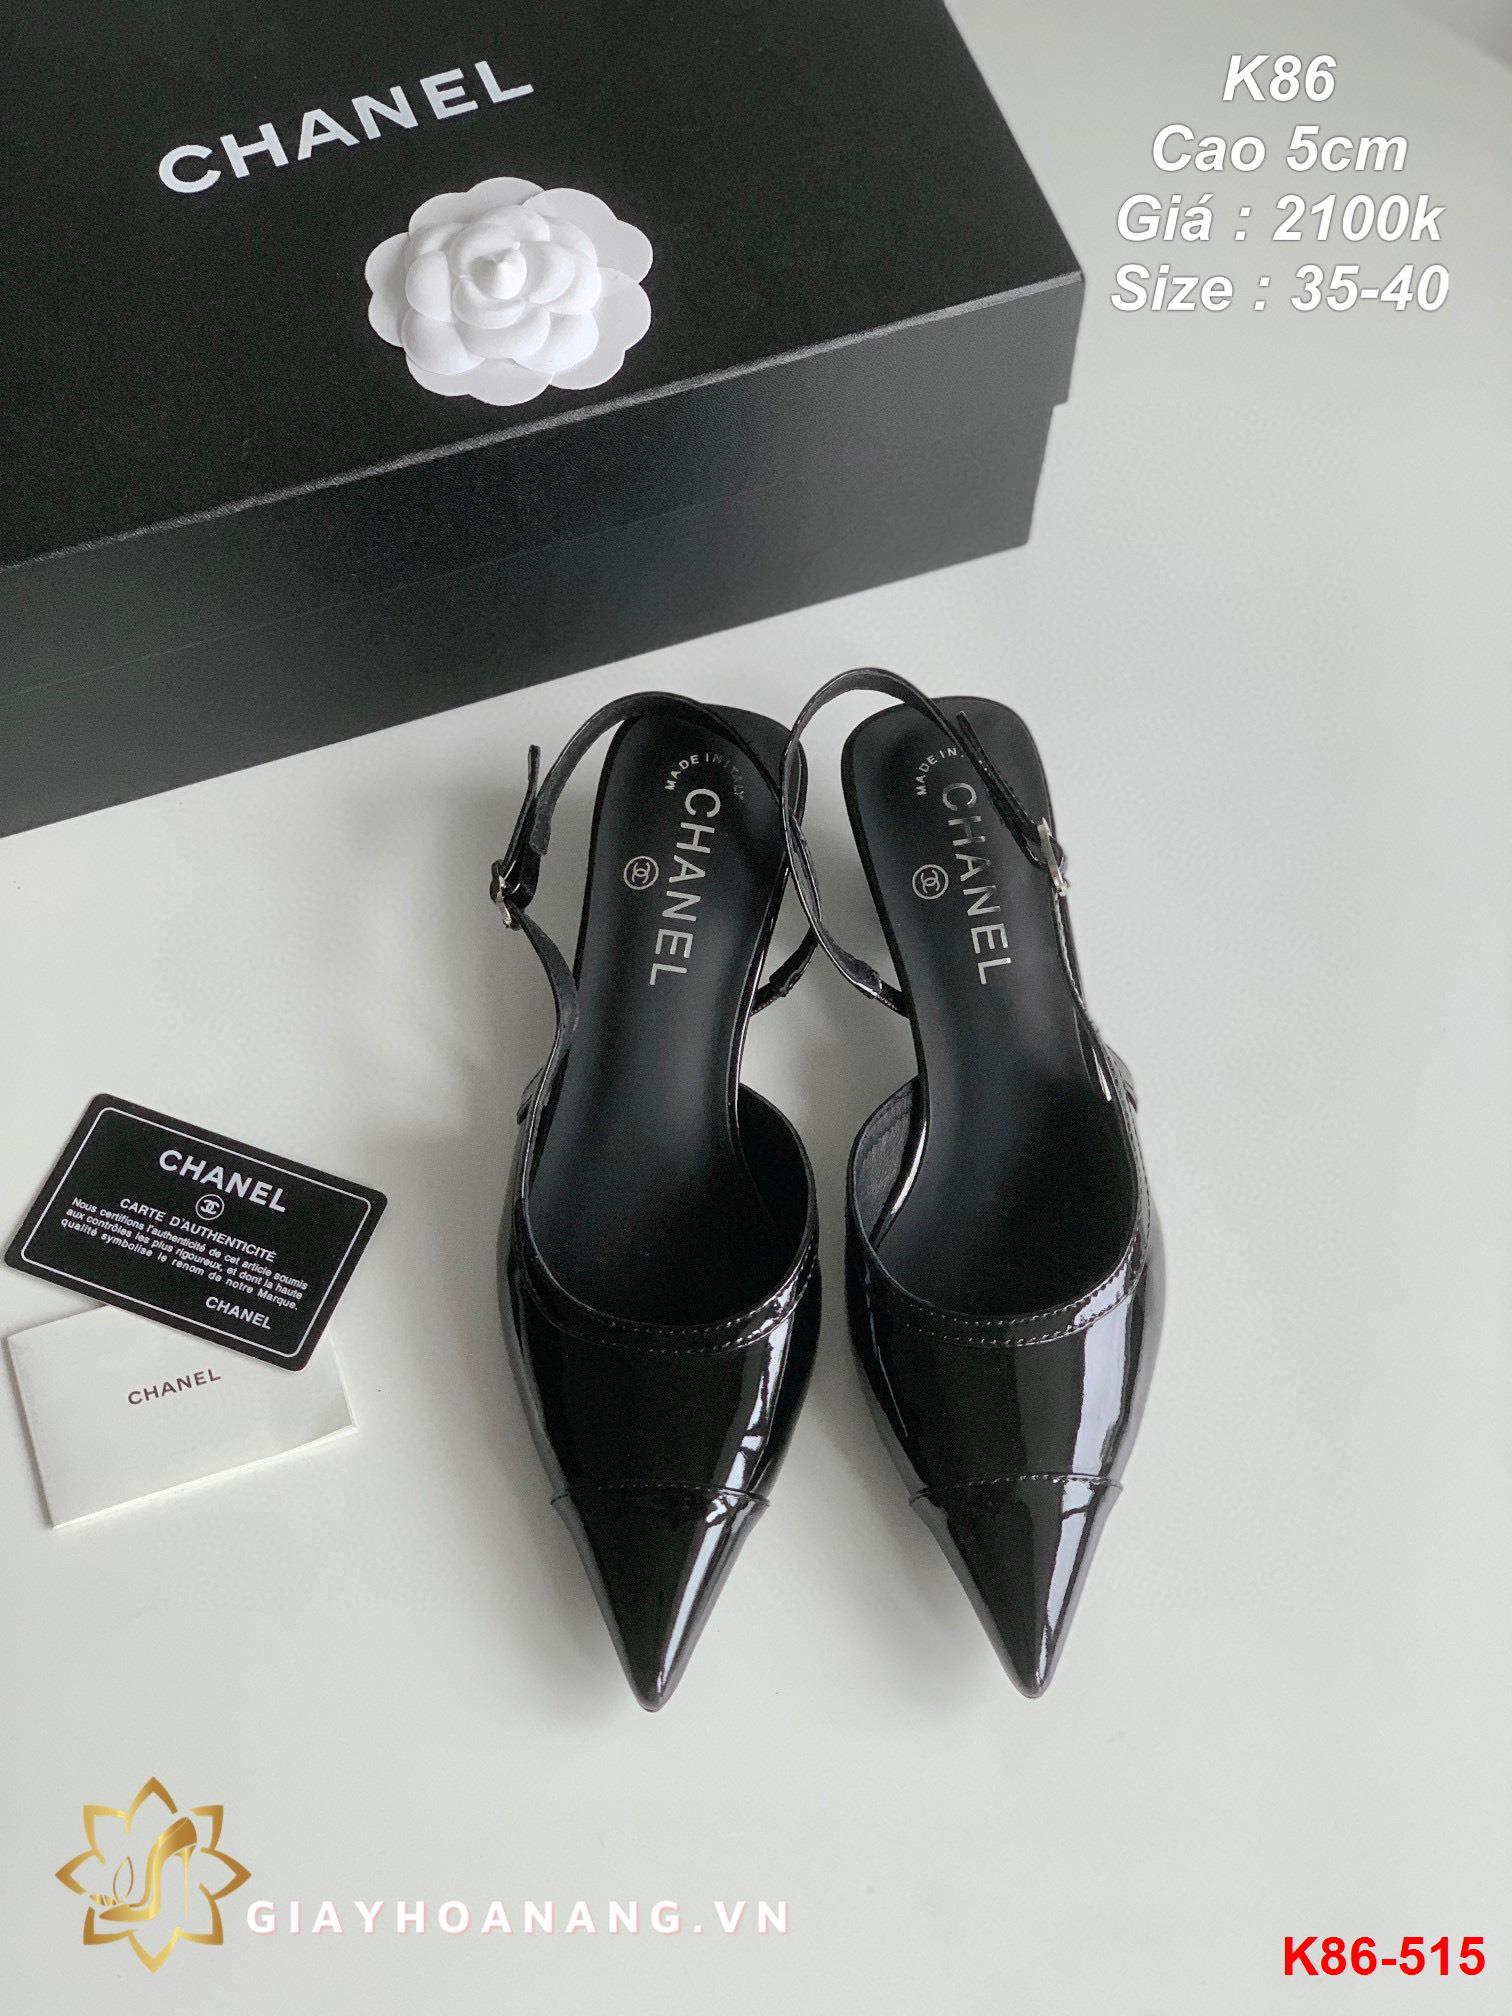 K86-515 Chanel sandal cao 5cm siêu cấp